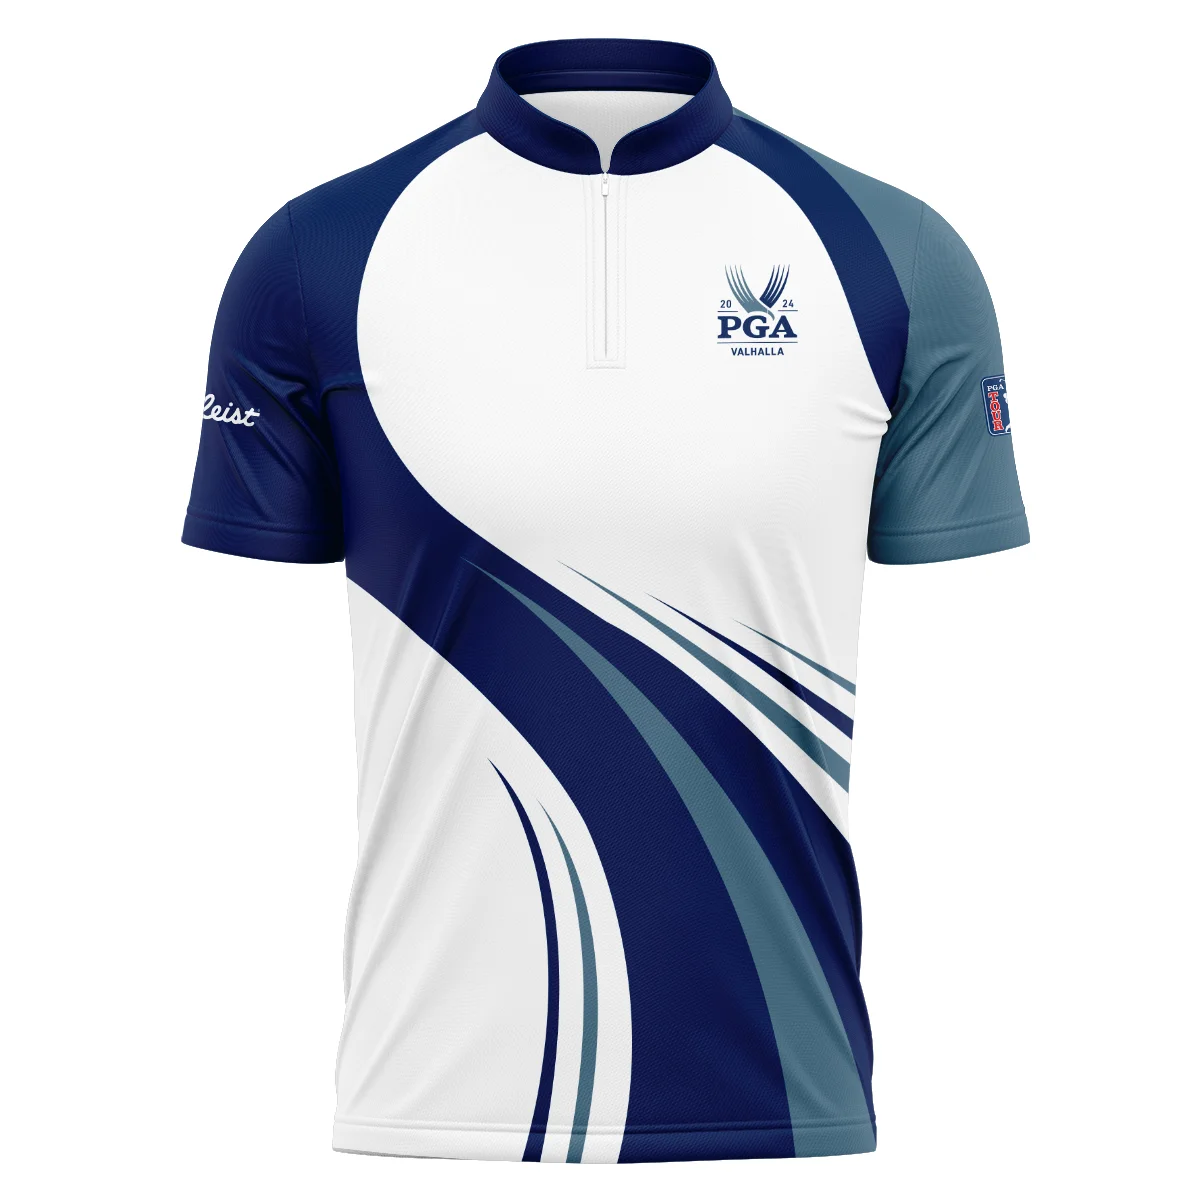 2024 PGA Championship Valhalla Golf Blue Wave Pattern Titleist Unisex Sweatshirt Style Classic Sweatshirt